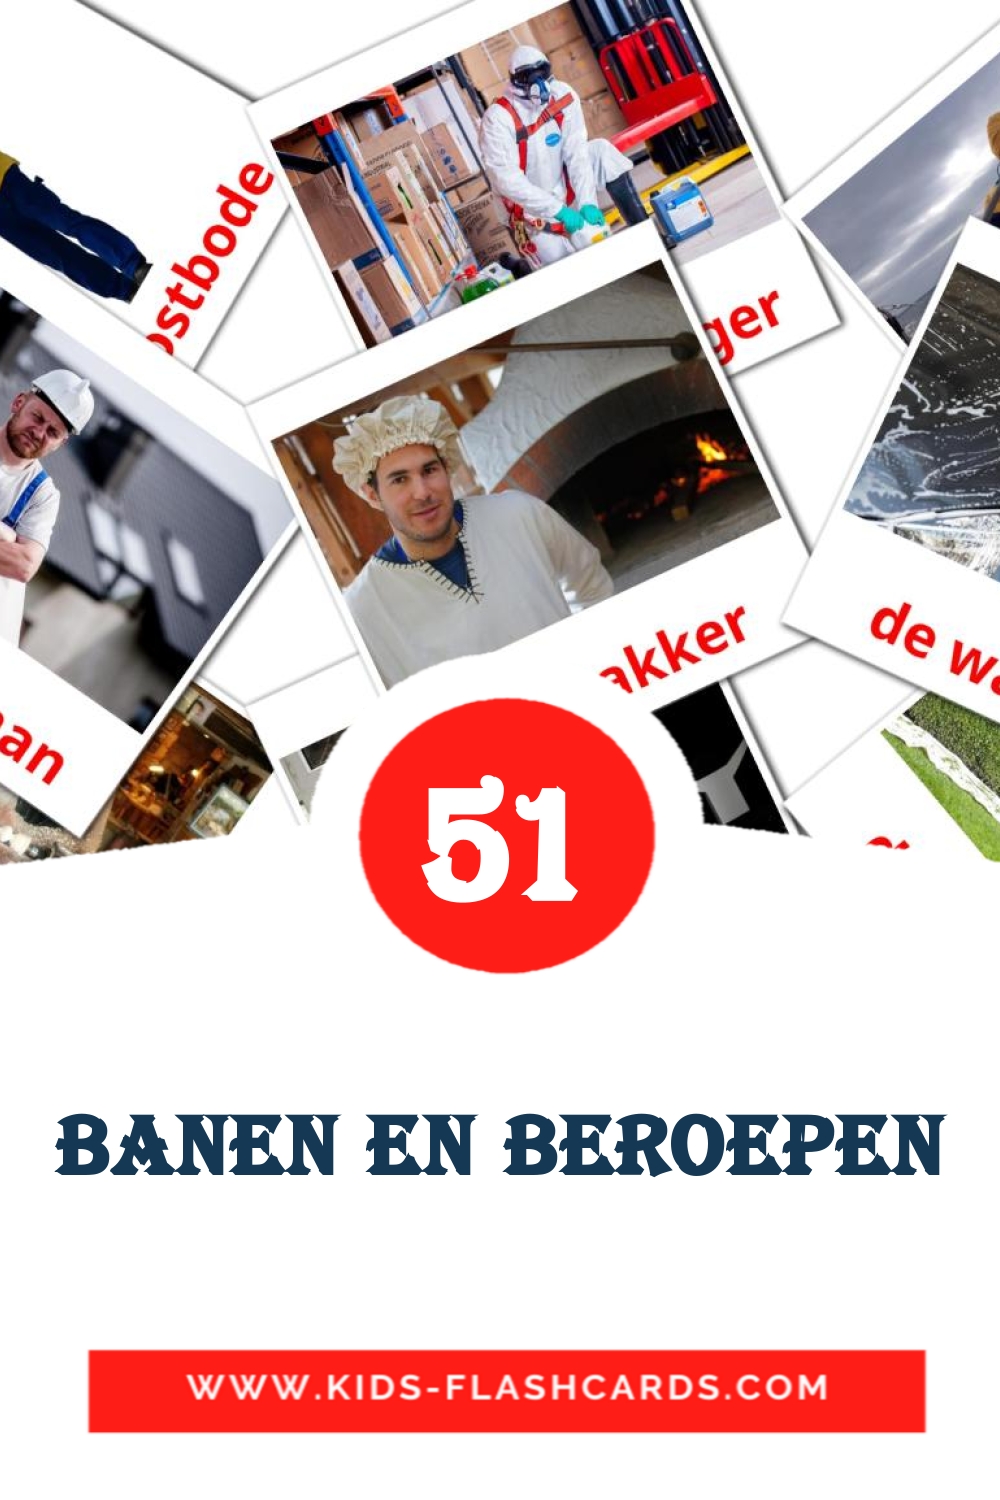 51 carte illustrate di Banen en beroepen per la scuola materna in olandese